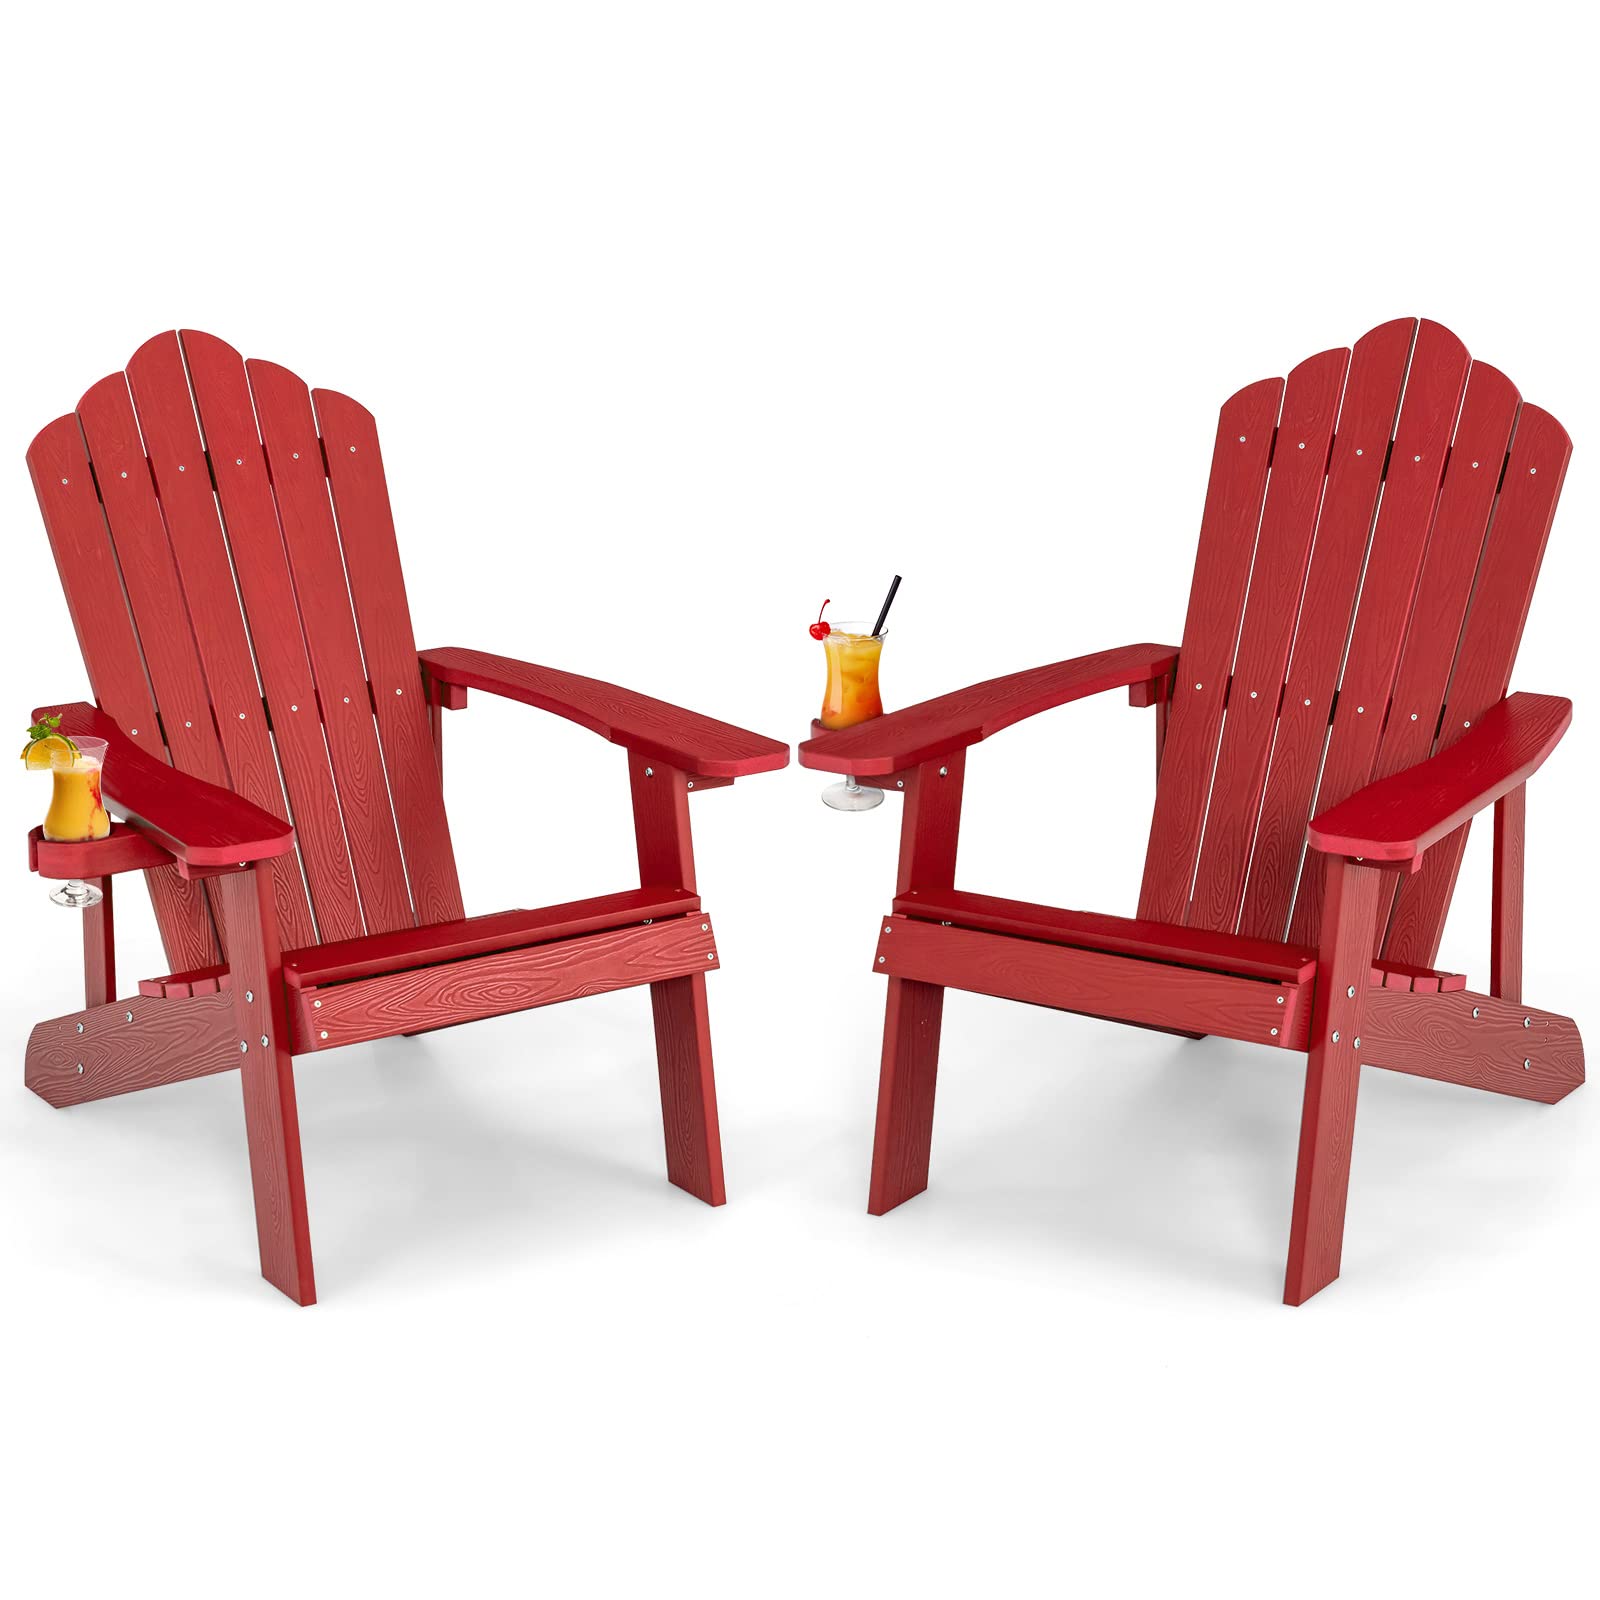 Giantex Outdoor Adirondack Chair, Red